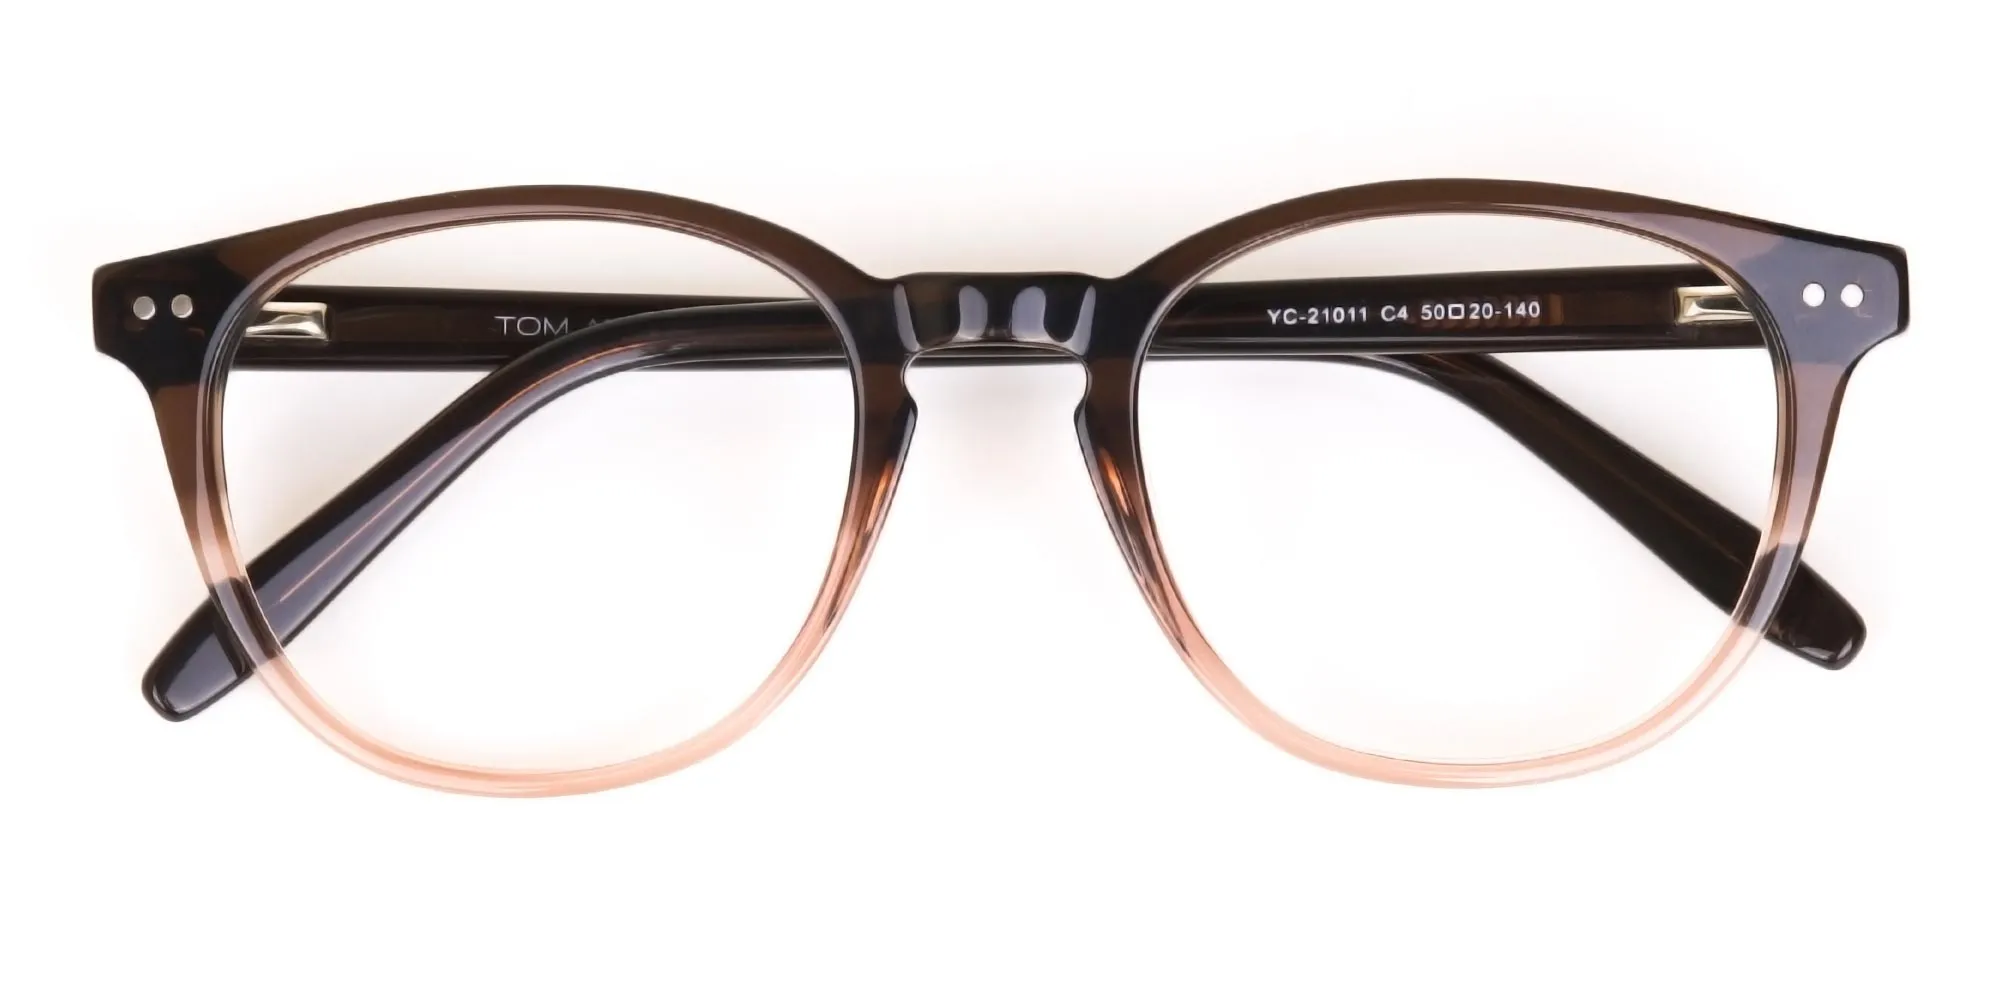 Mocha Brown & Crystal Beige Two-Tone Glasses-2